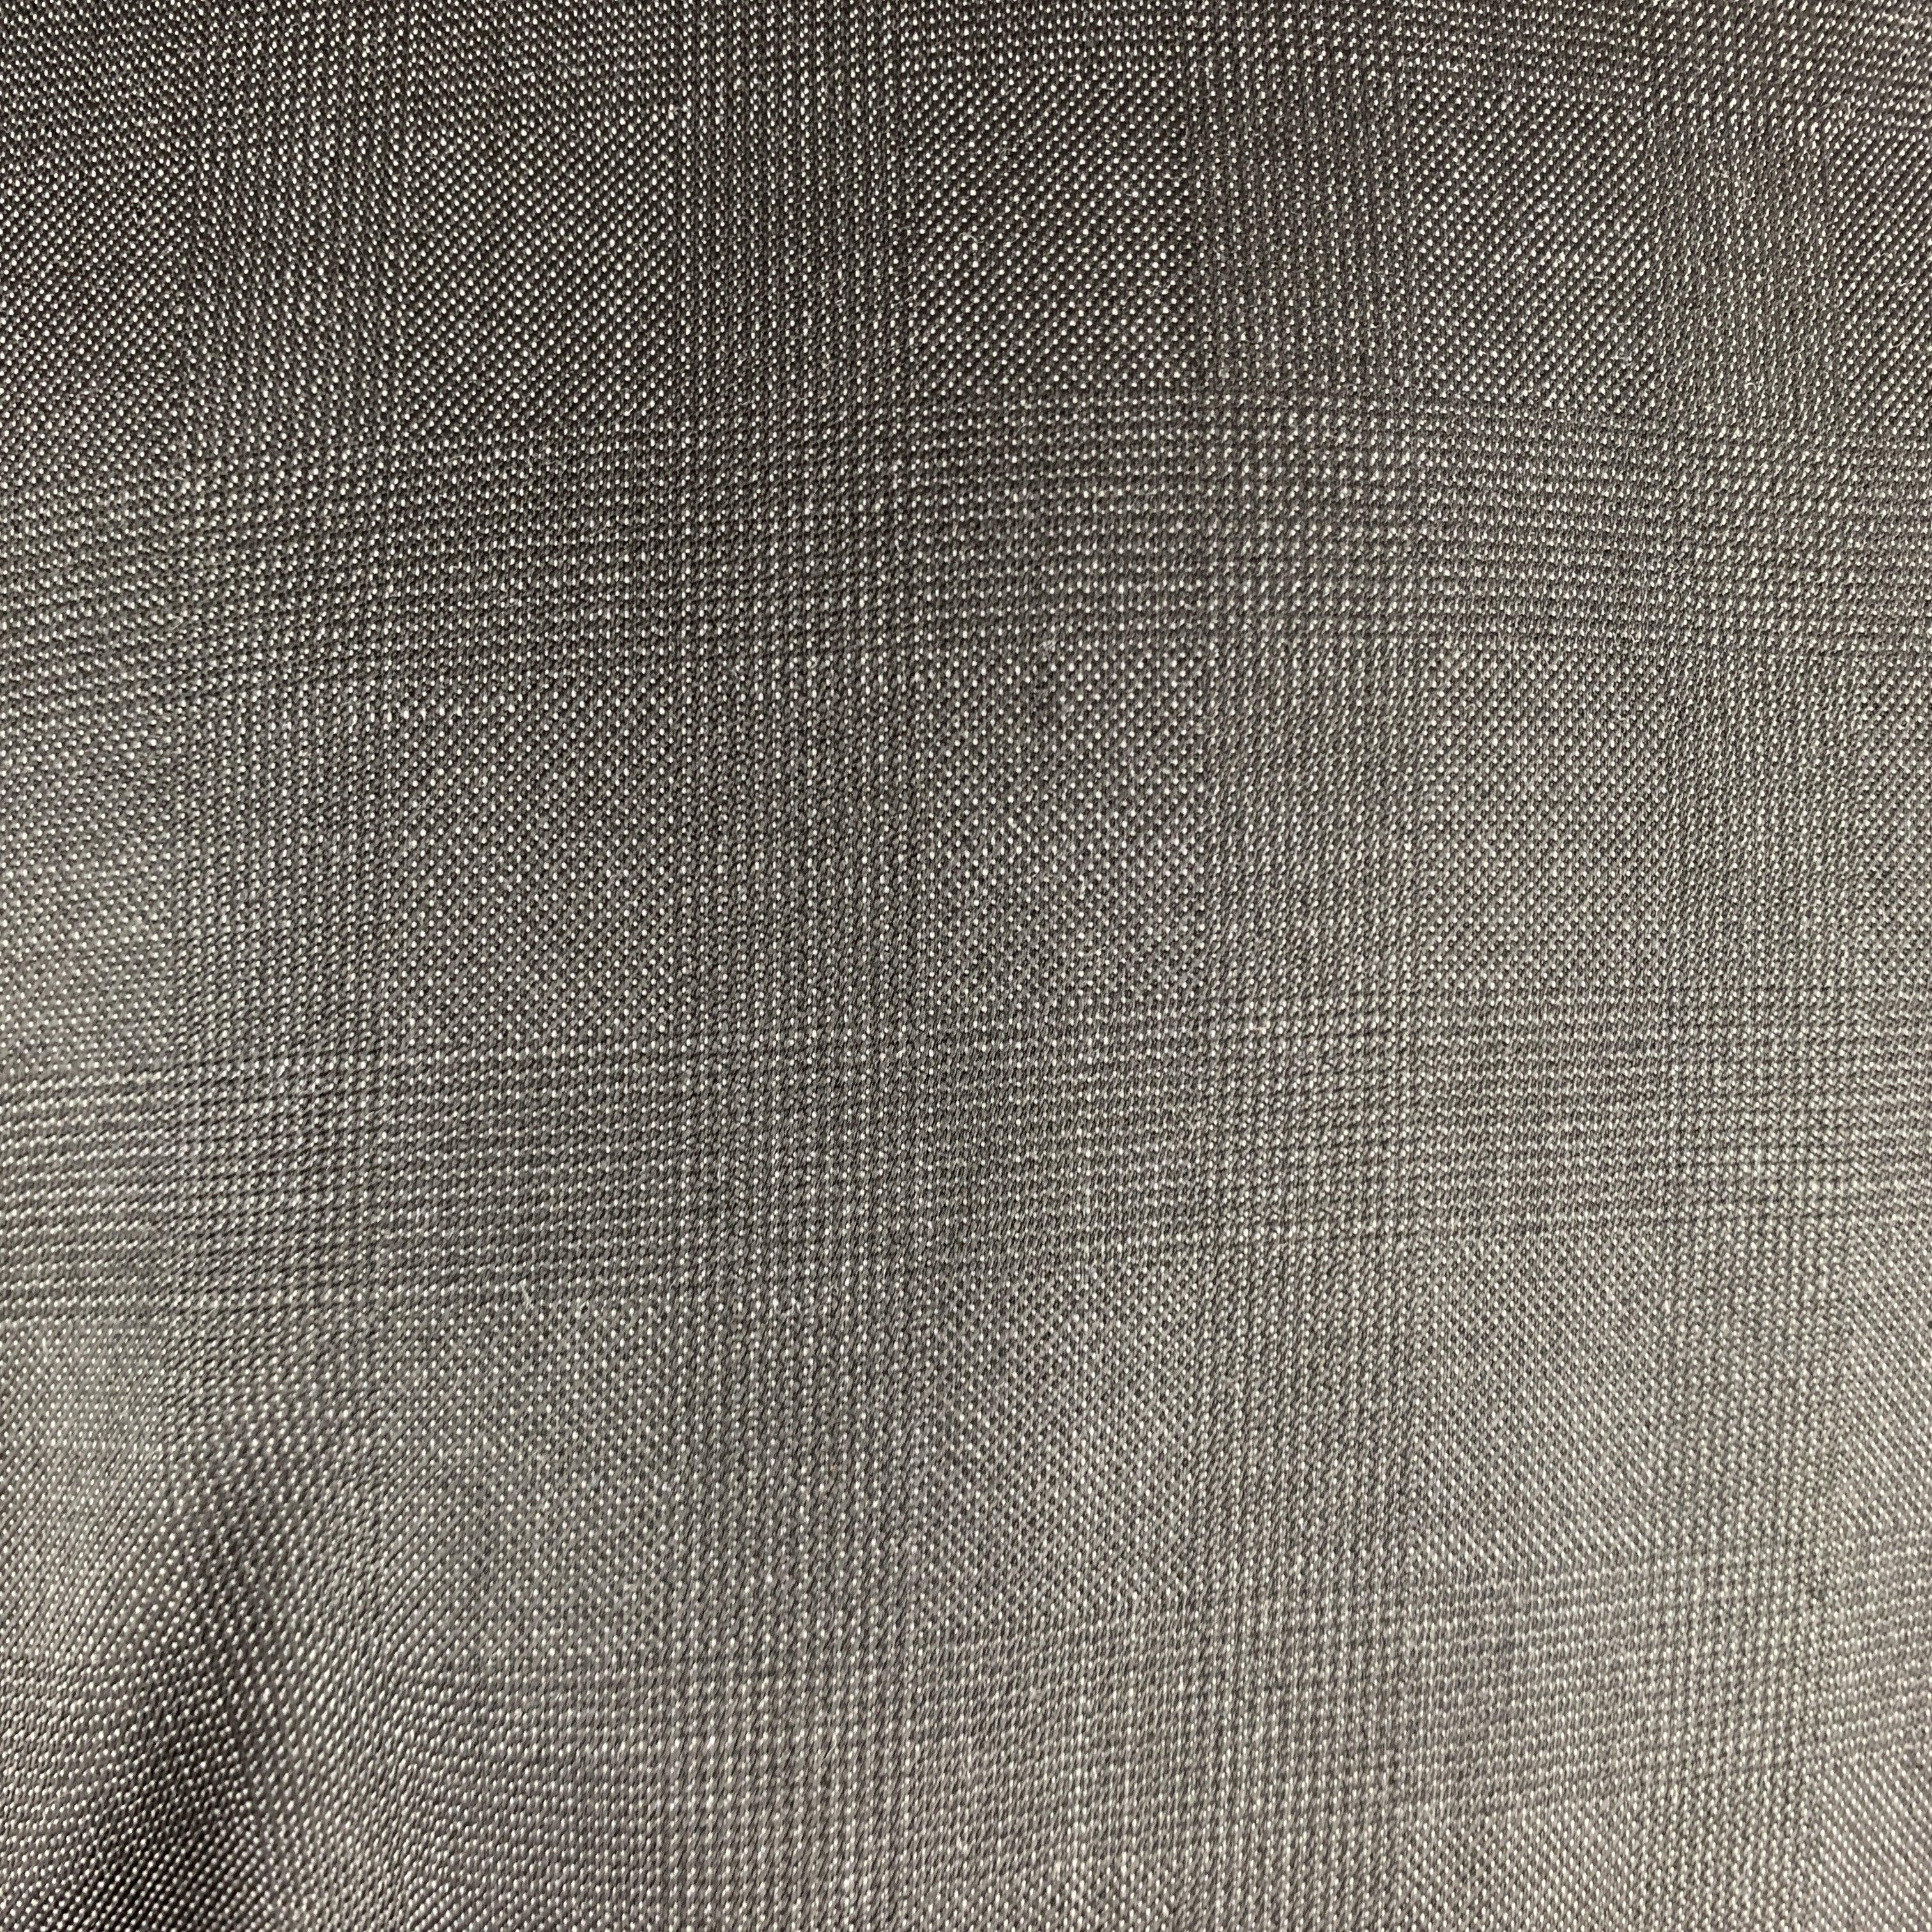 ELIE TAHARI Size 40 Charcoal Glenplaid Wool Notch Lapel Suit NWT For Sale 2